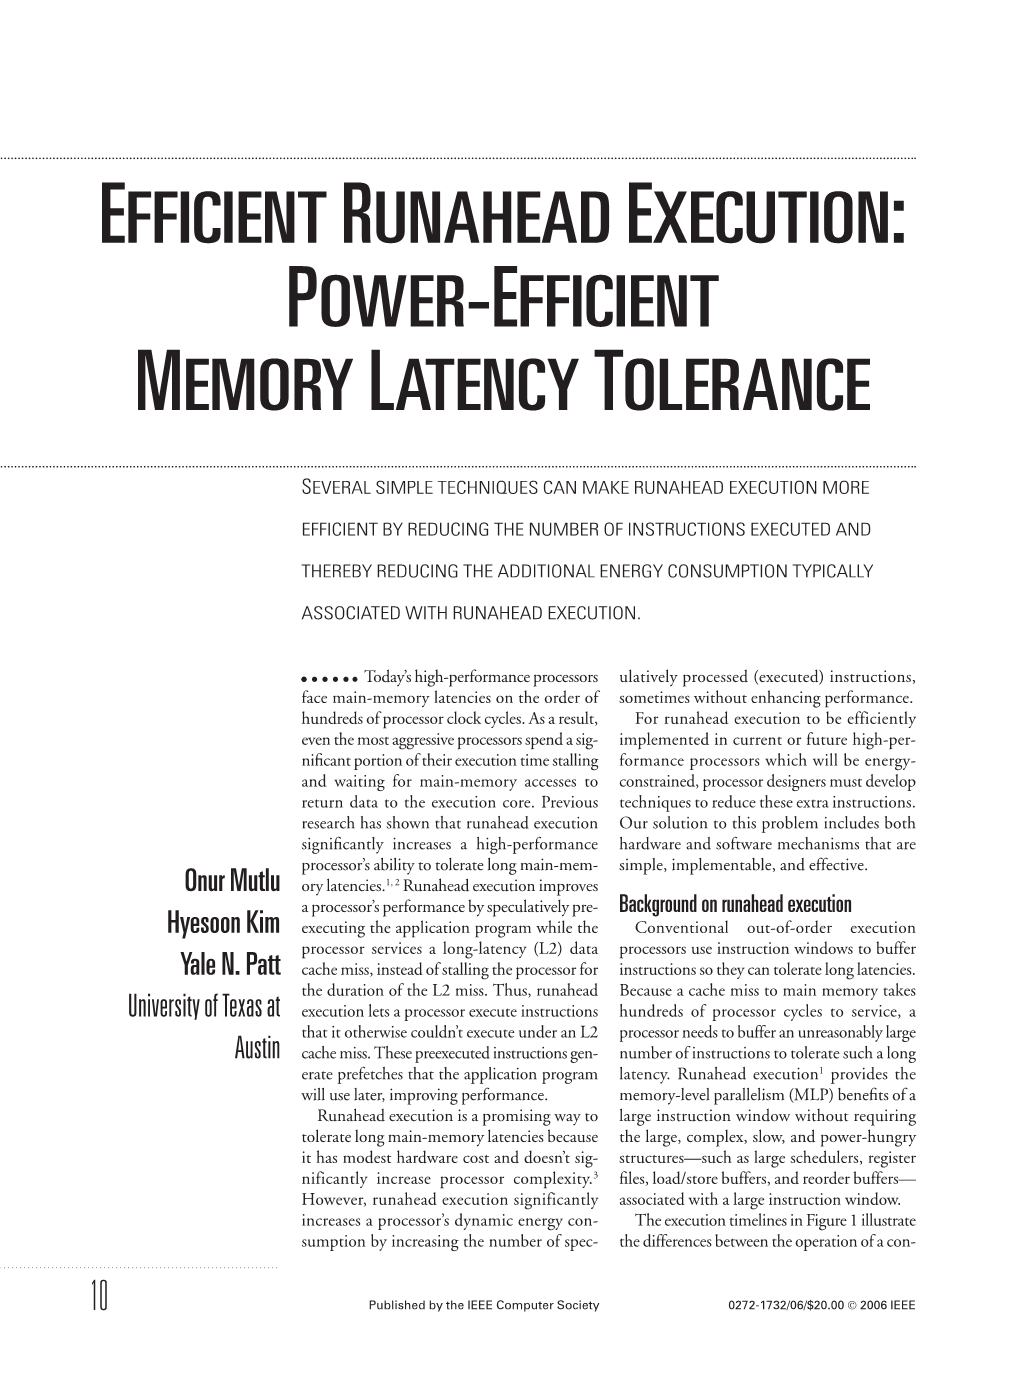 Efficient Runahead Execution: Power-Efficient Memory Latency Tolerance